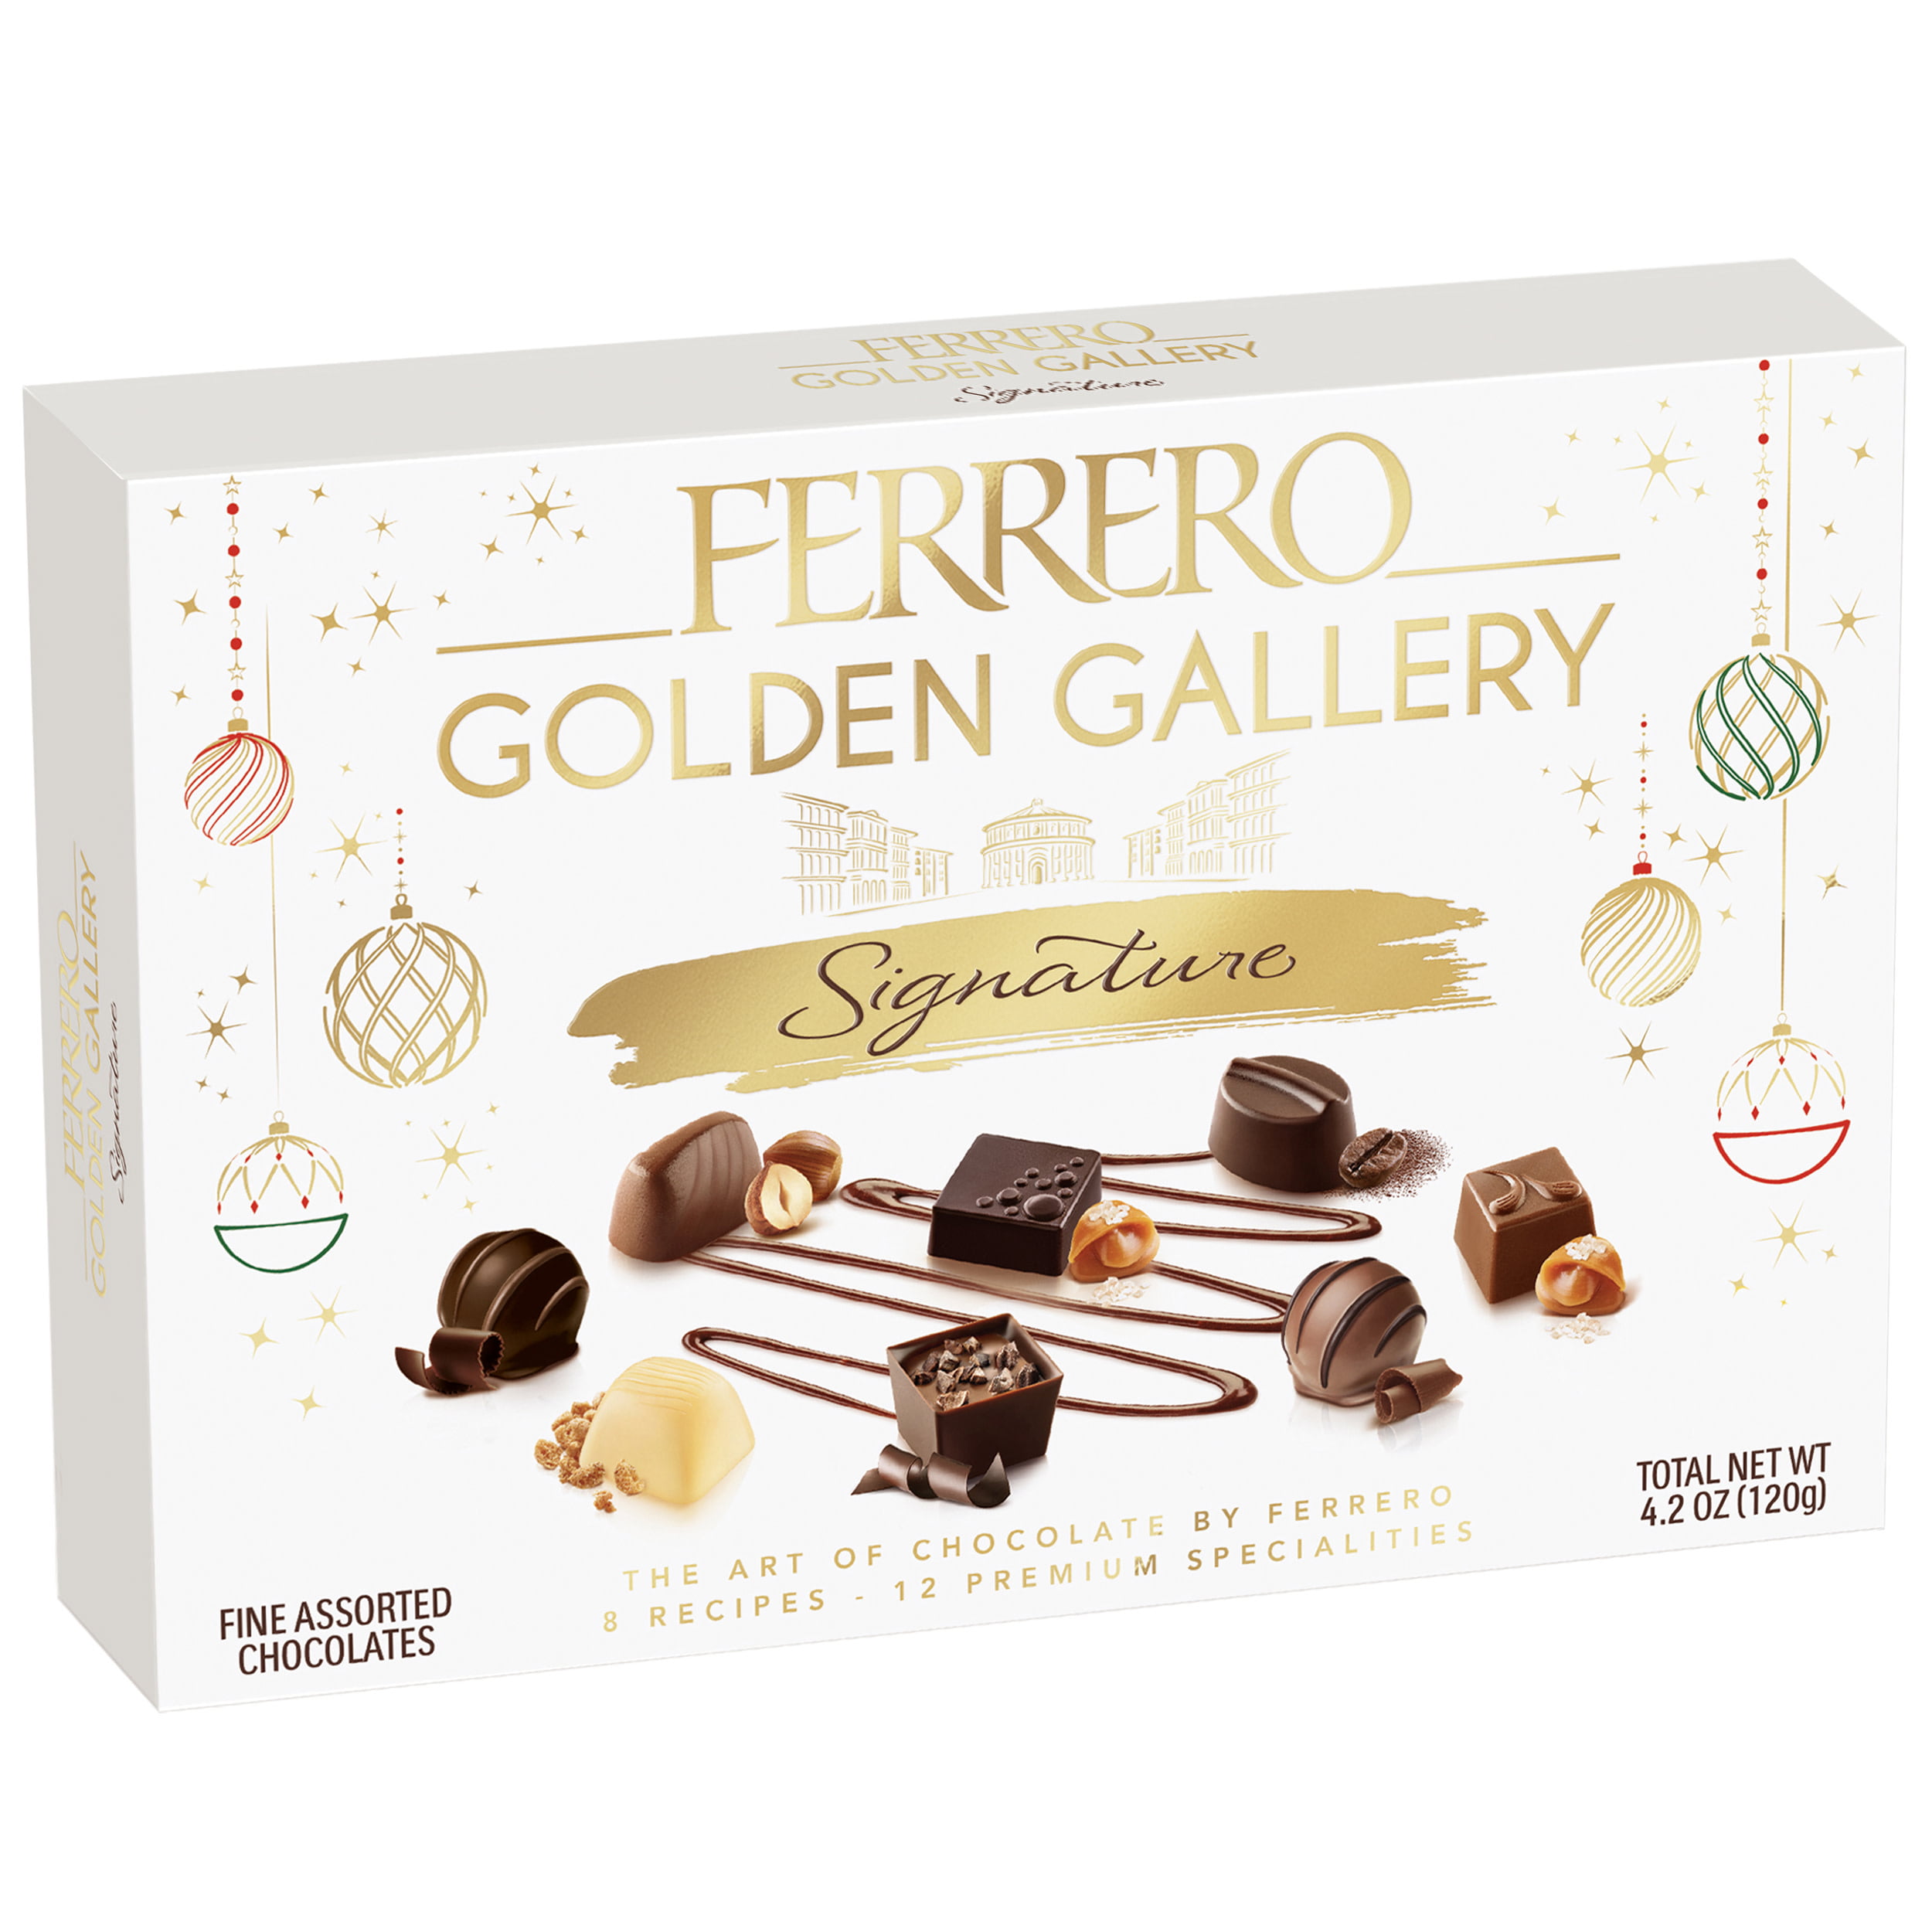  Ferrero Collection, 24 Count, Premium Gourmet Assorted Hazelnut  Milk Chocolate, Dark Chocolate And Coconut Chocolates, Luxury Chocolate  Holiday Gift Box : Grocery & Gourmet Food